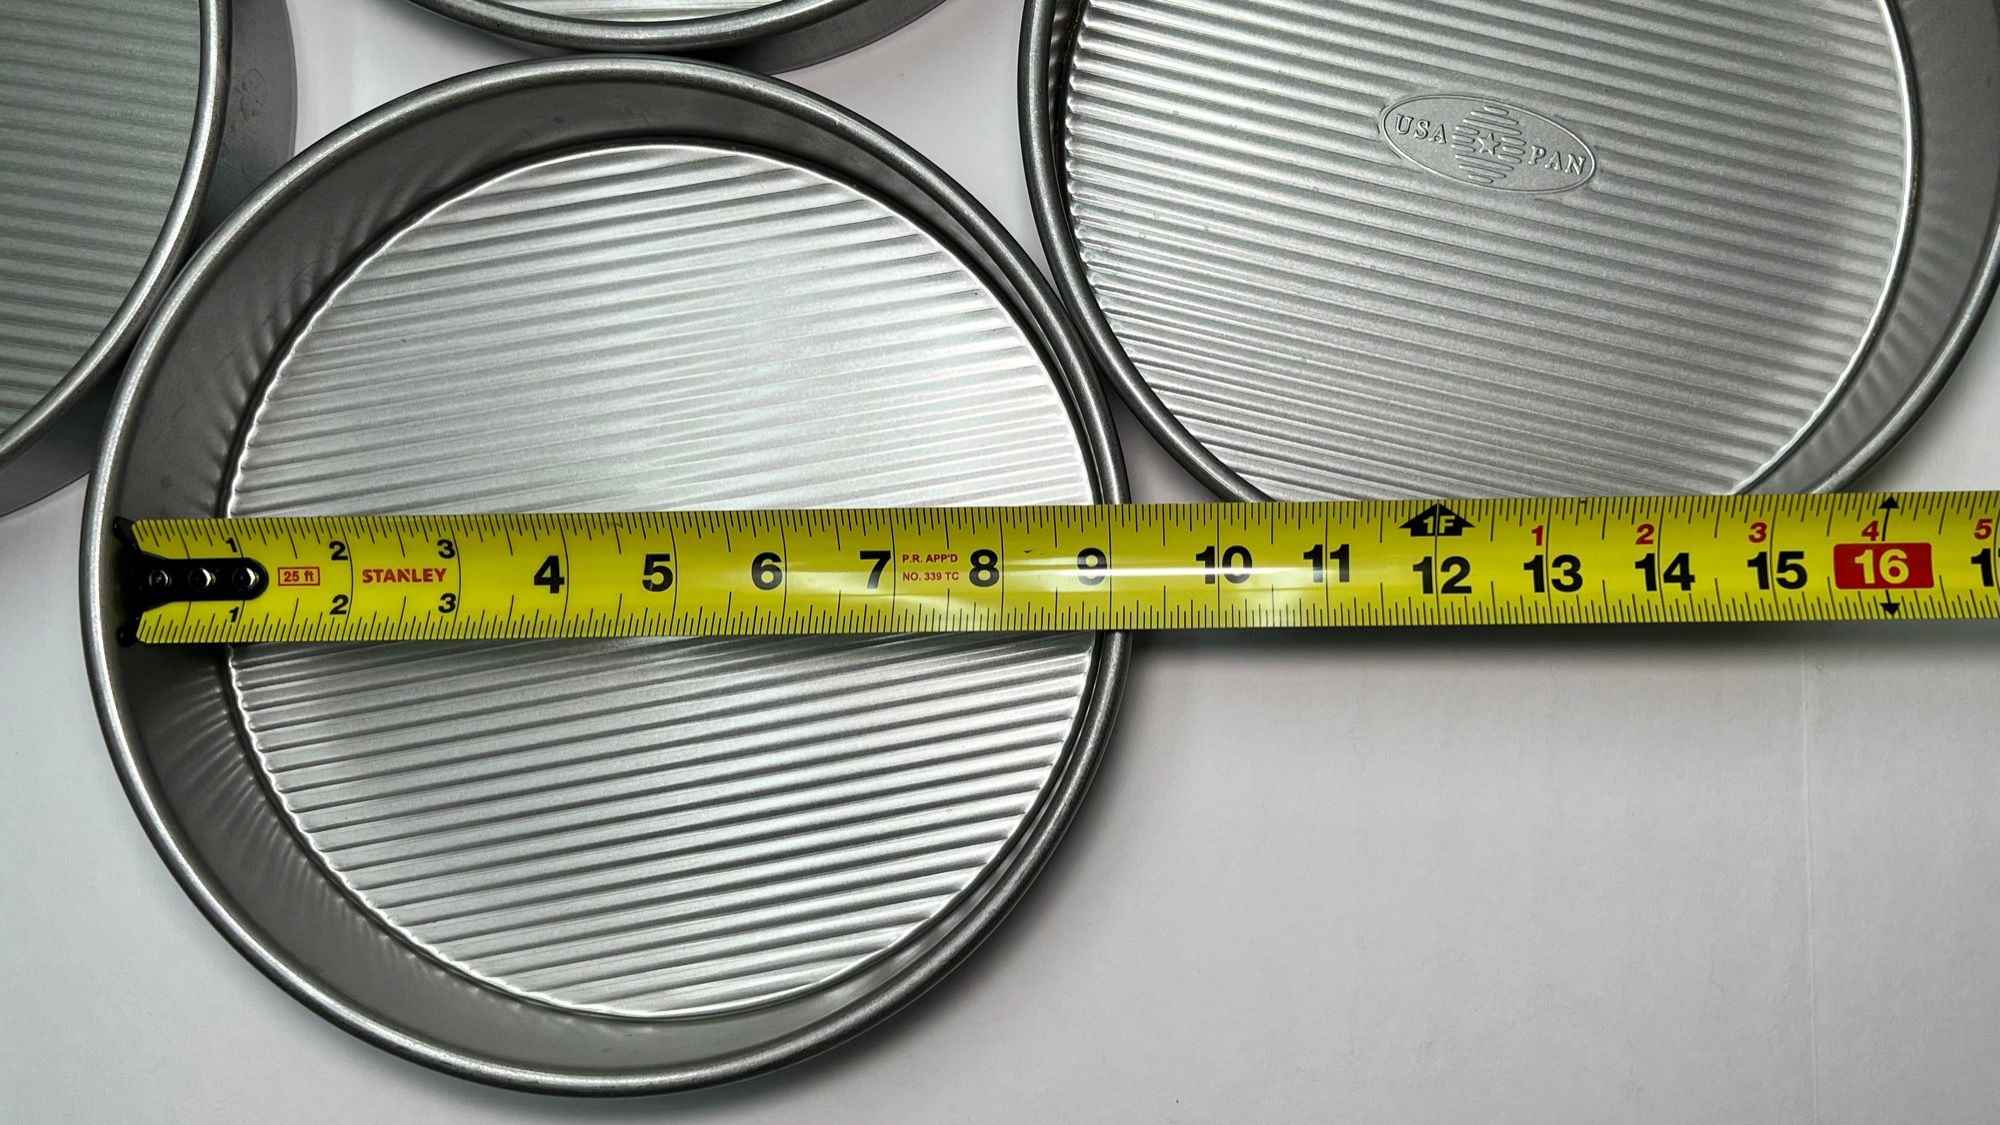 Round Cake Pans 9-inch Diameter